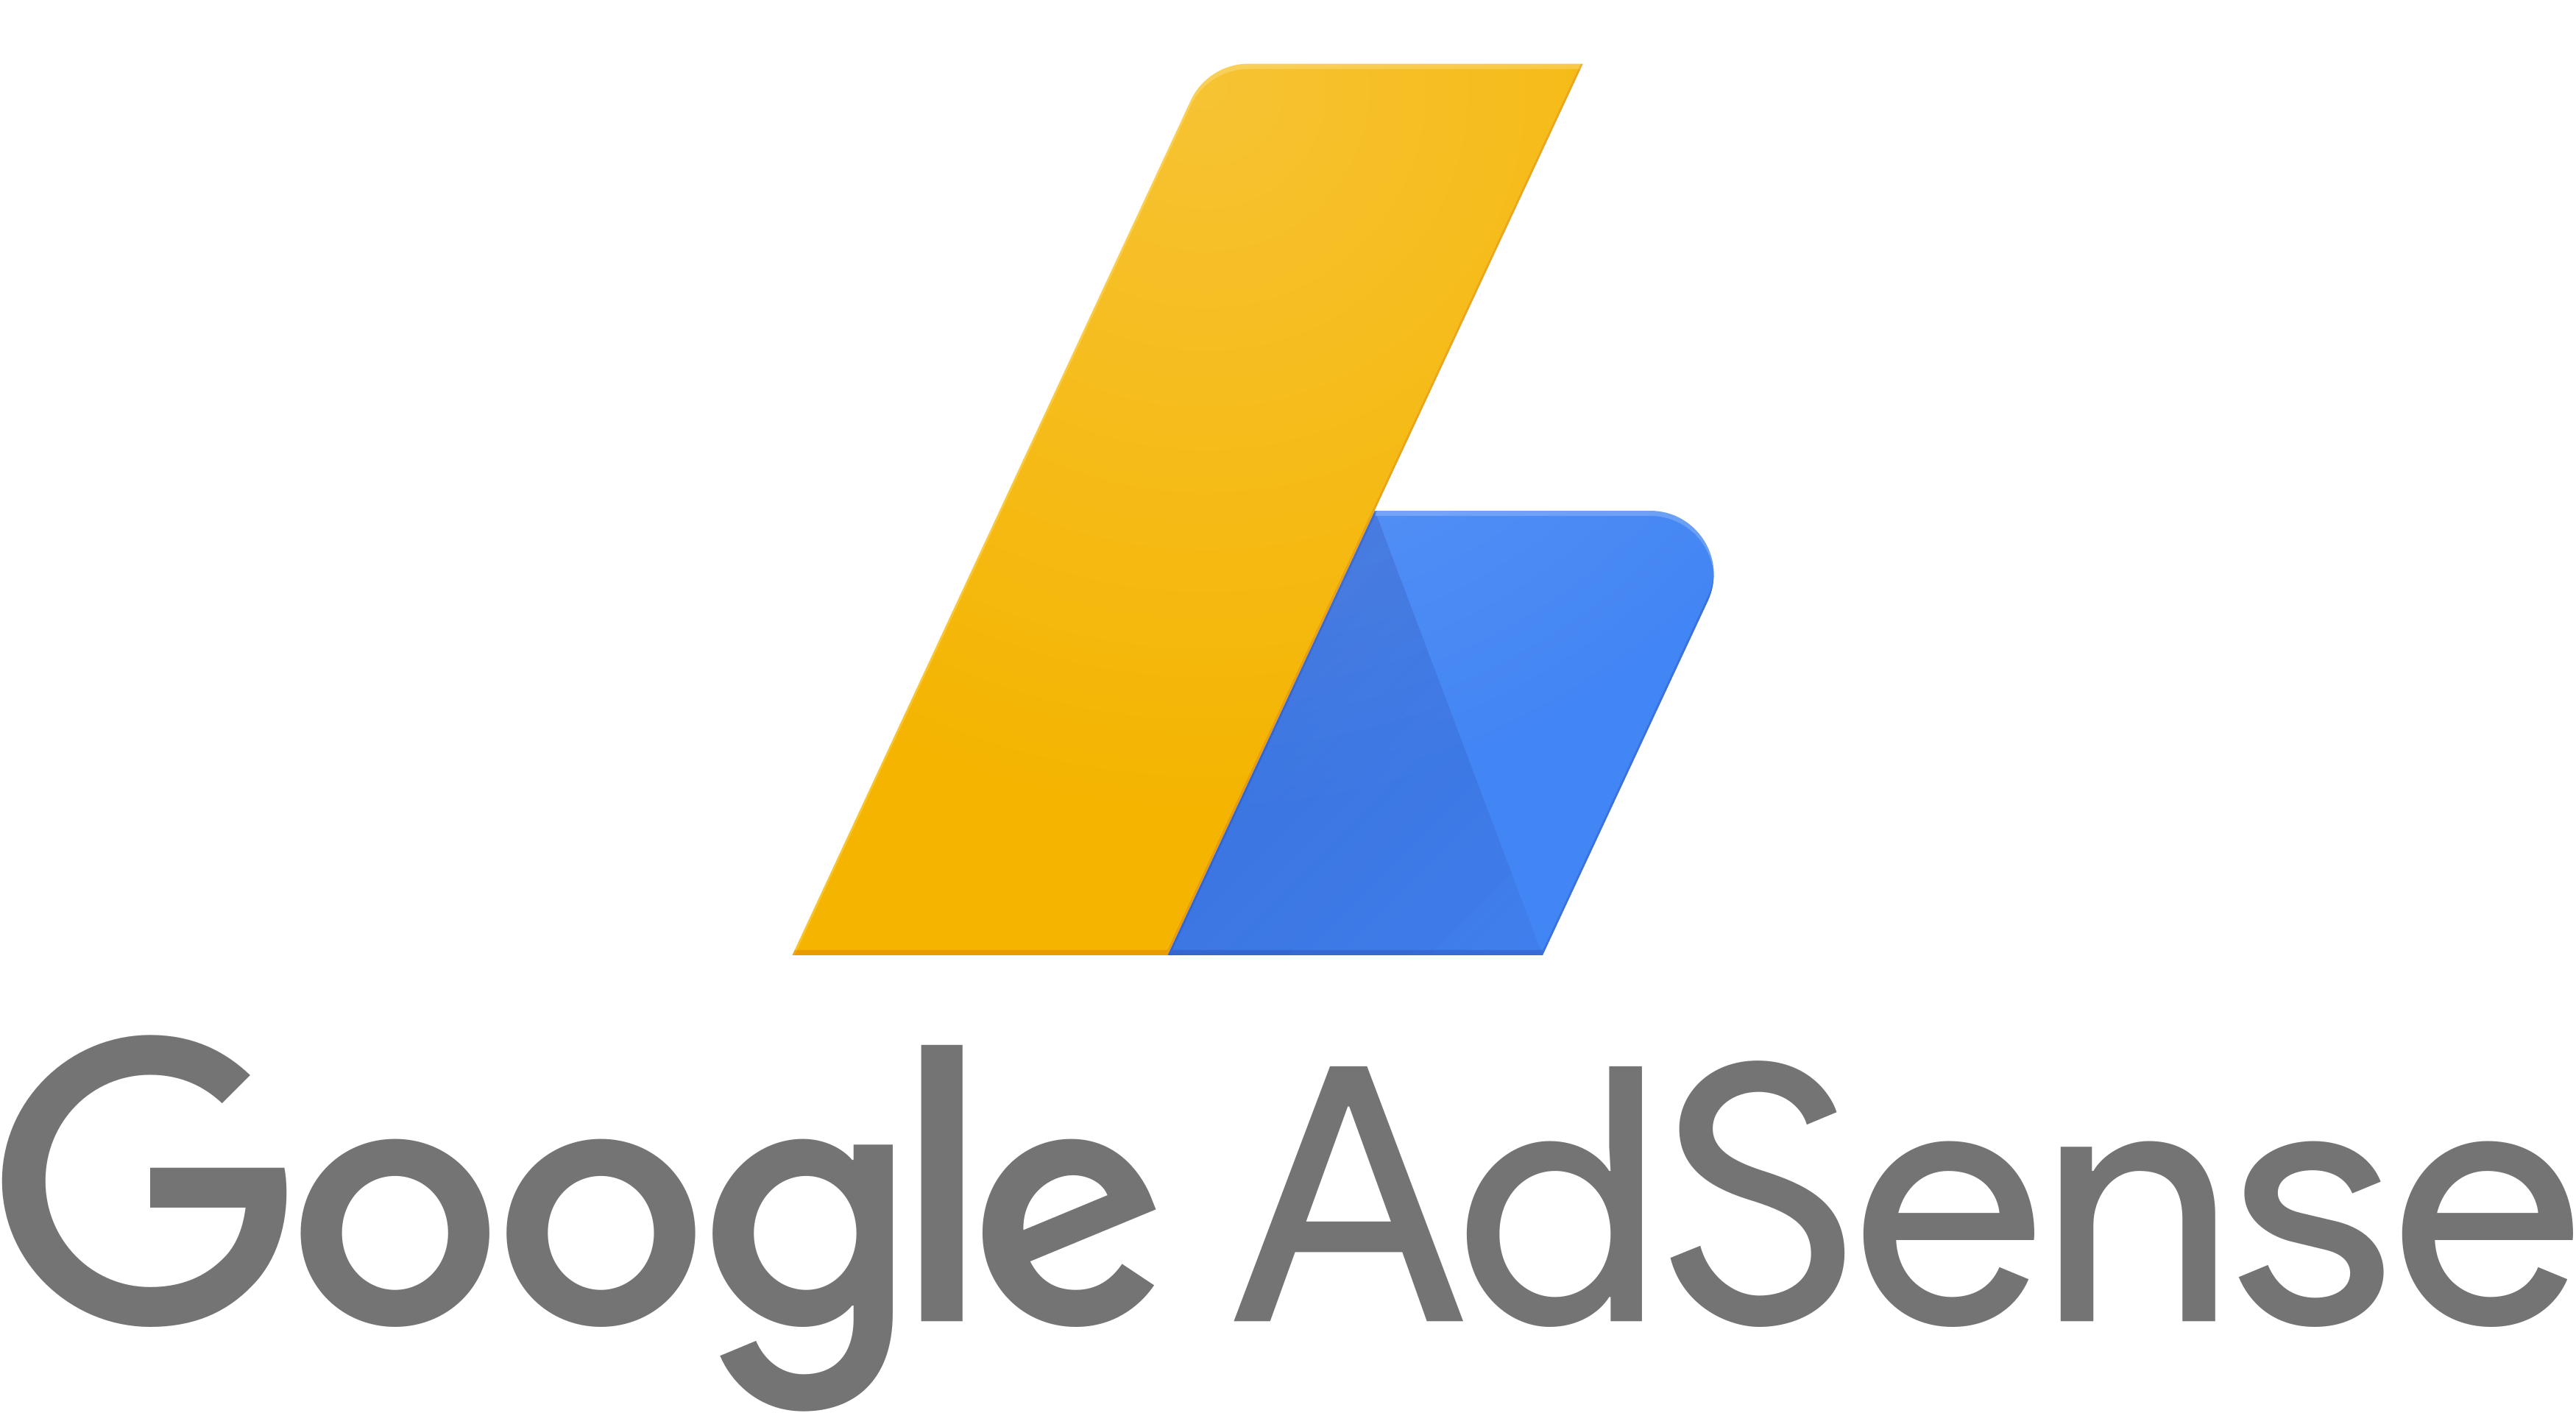 Acuant Logo - Google Adsense Account Approval: How To Make The Adsense Team Like ...